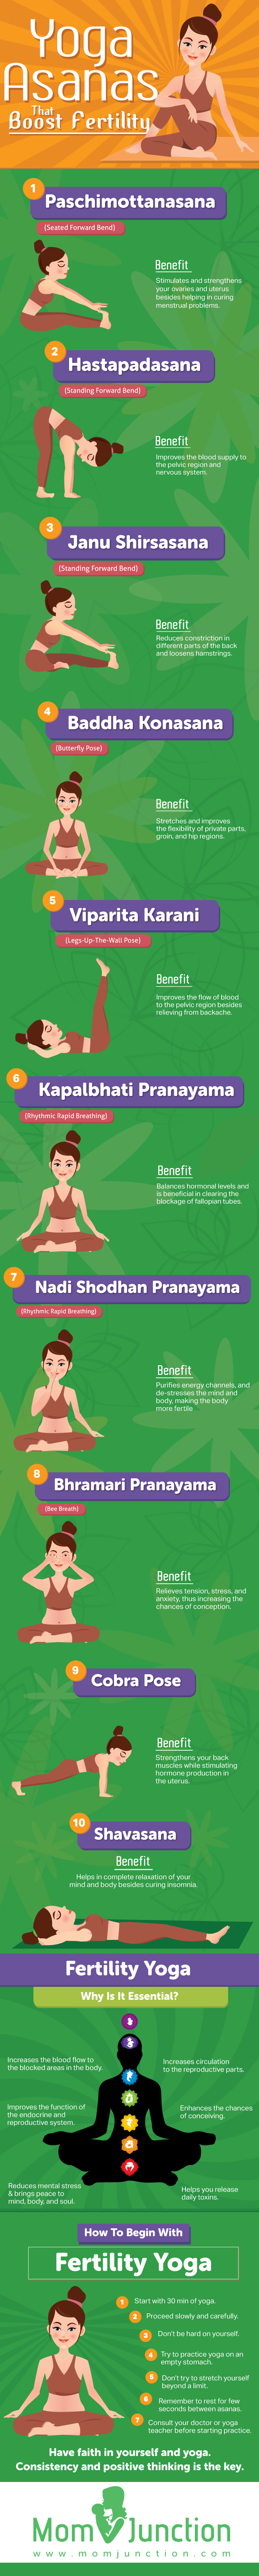 Top 10 Yoga Poses That Boost Fertility